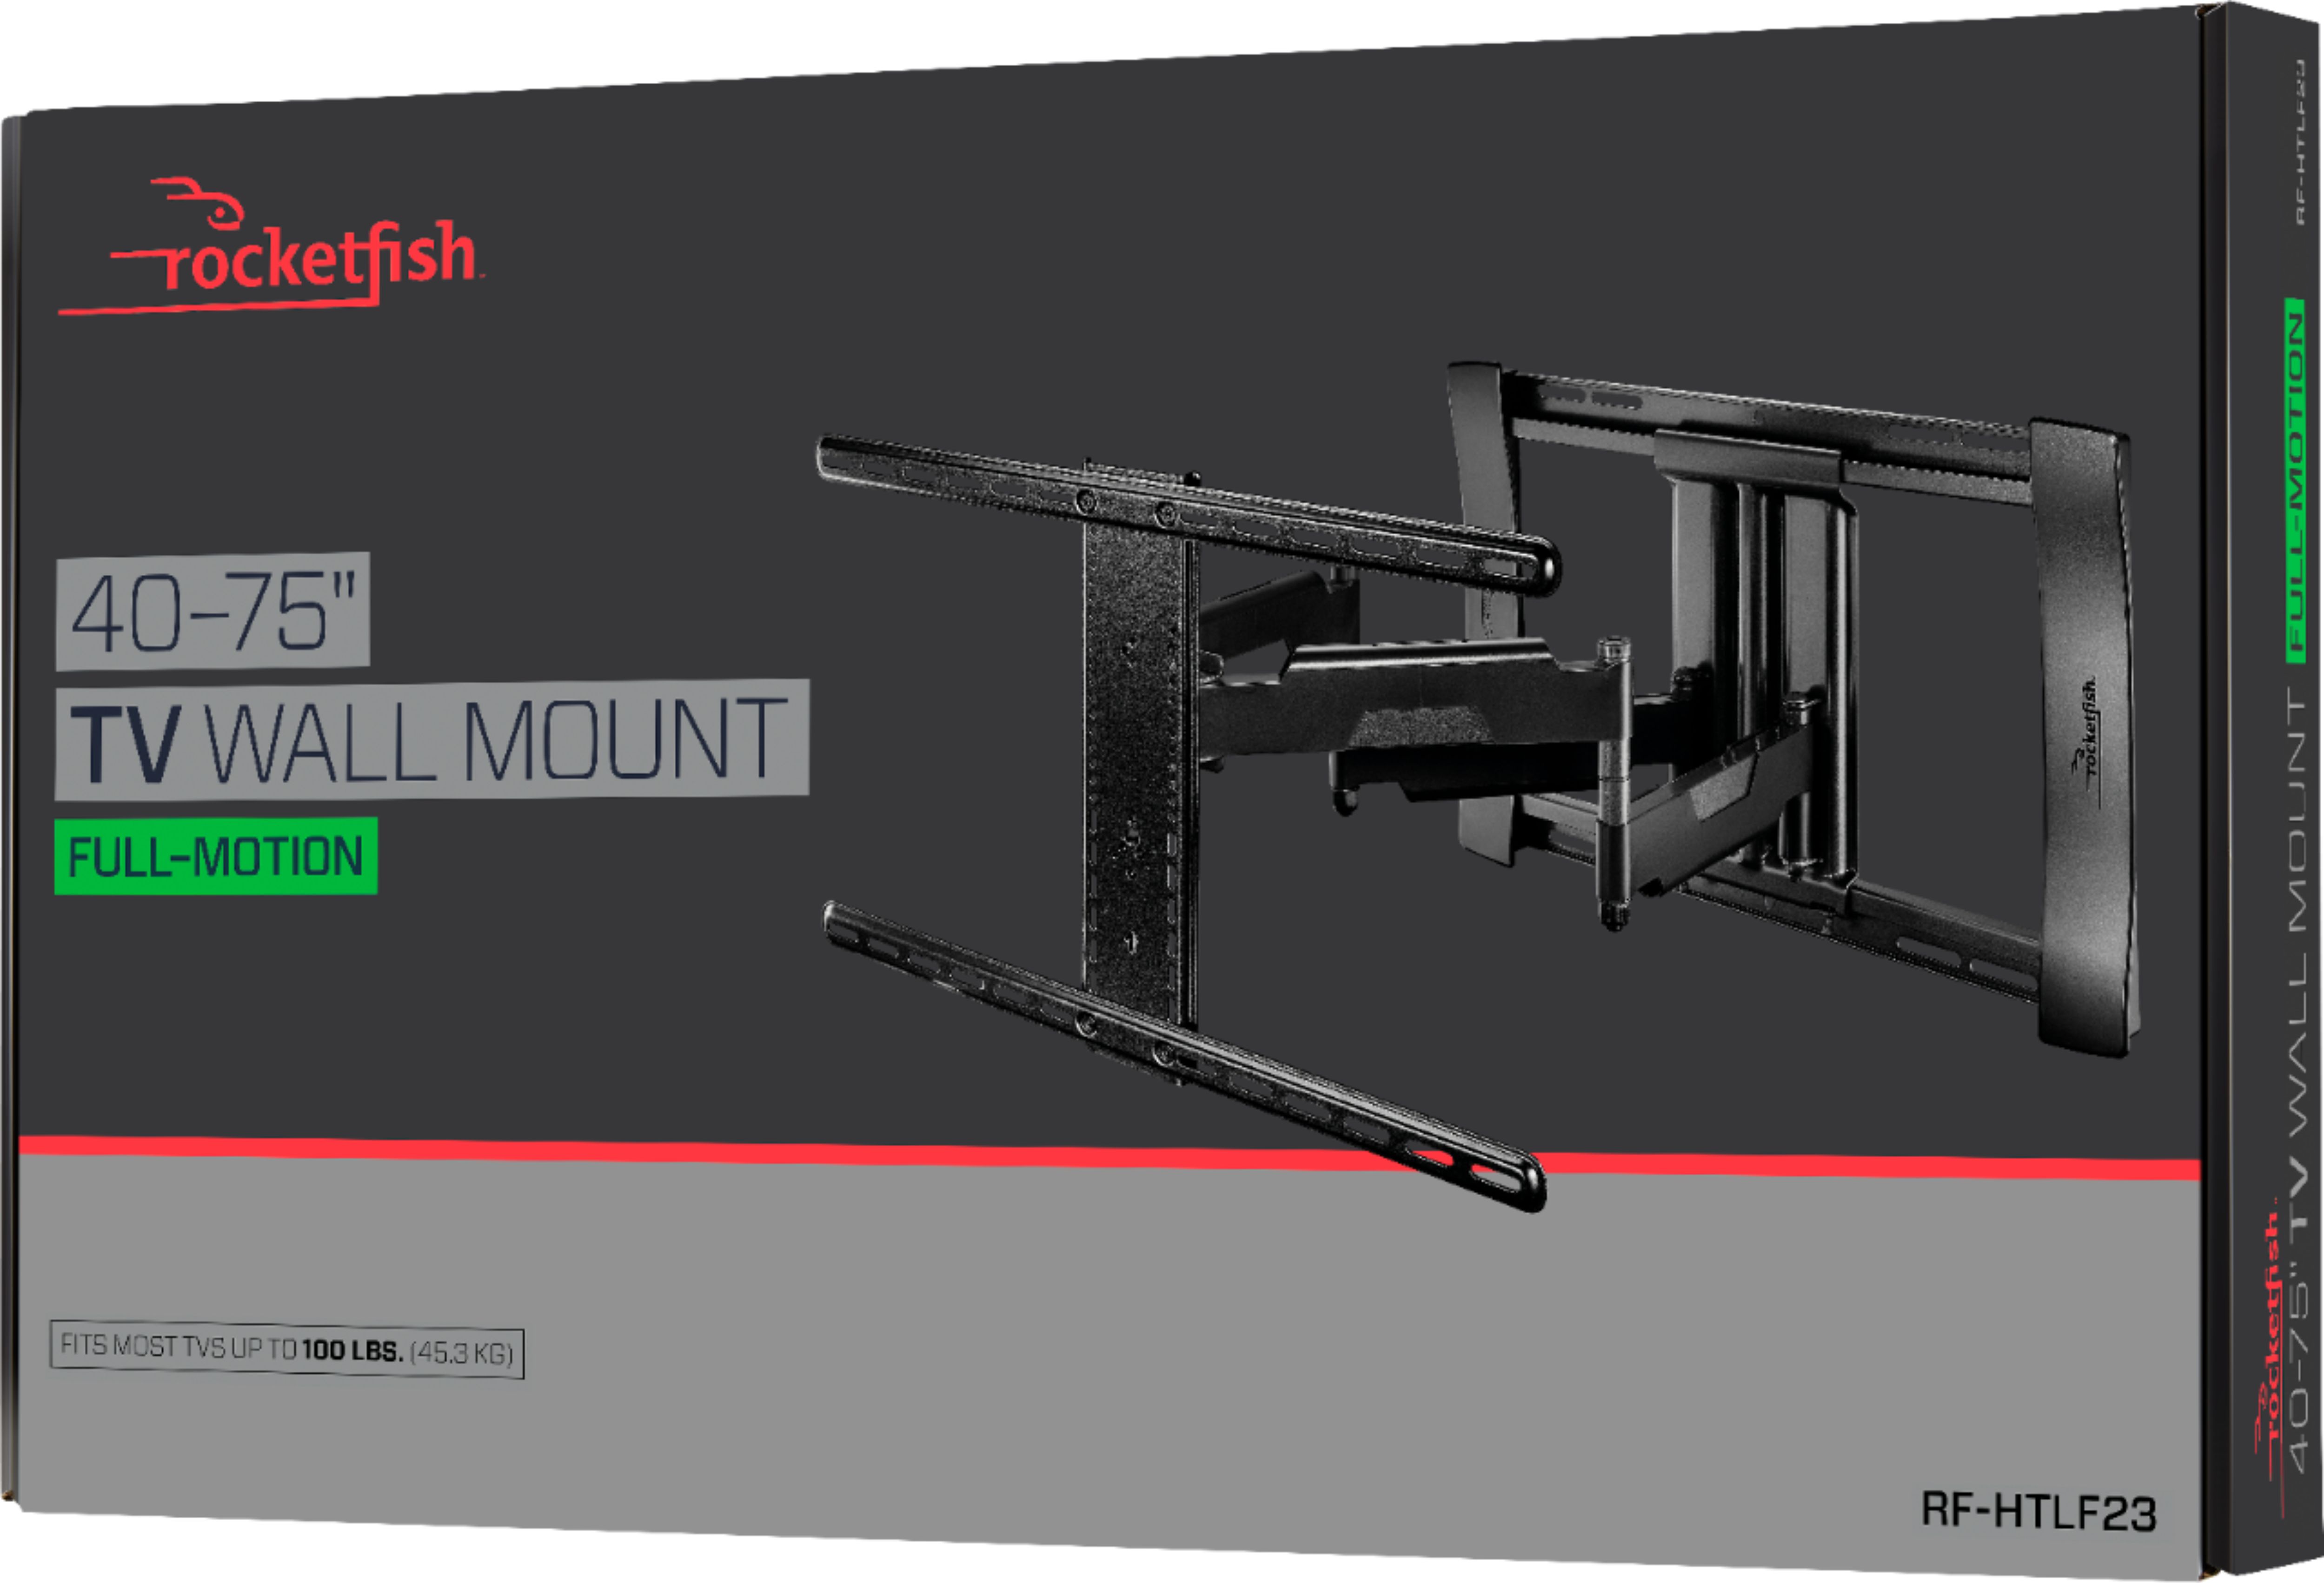 Rocketfish™ - Full-Motion TV Wall Mount for Most 40" - 75" TVs - Black